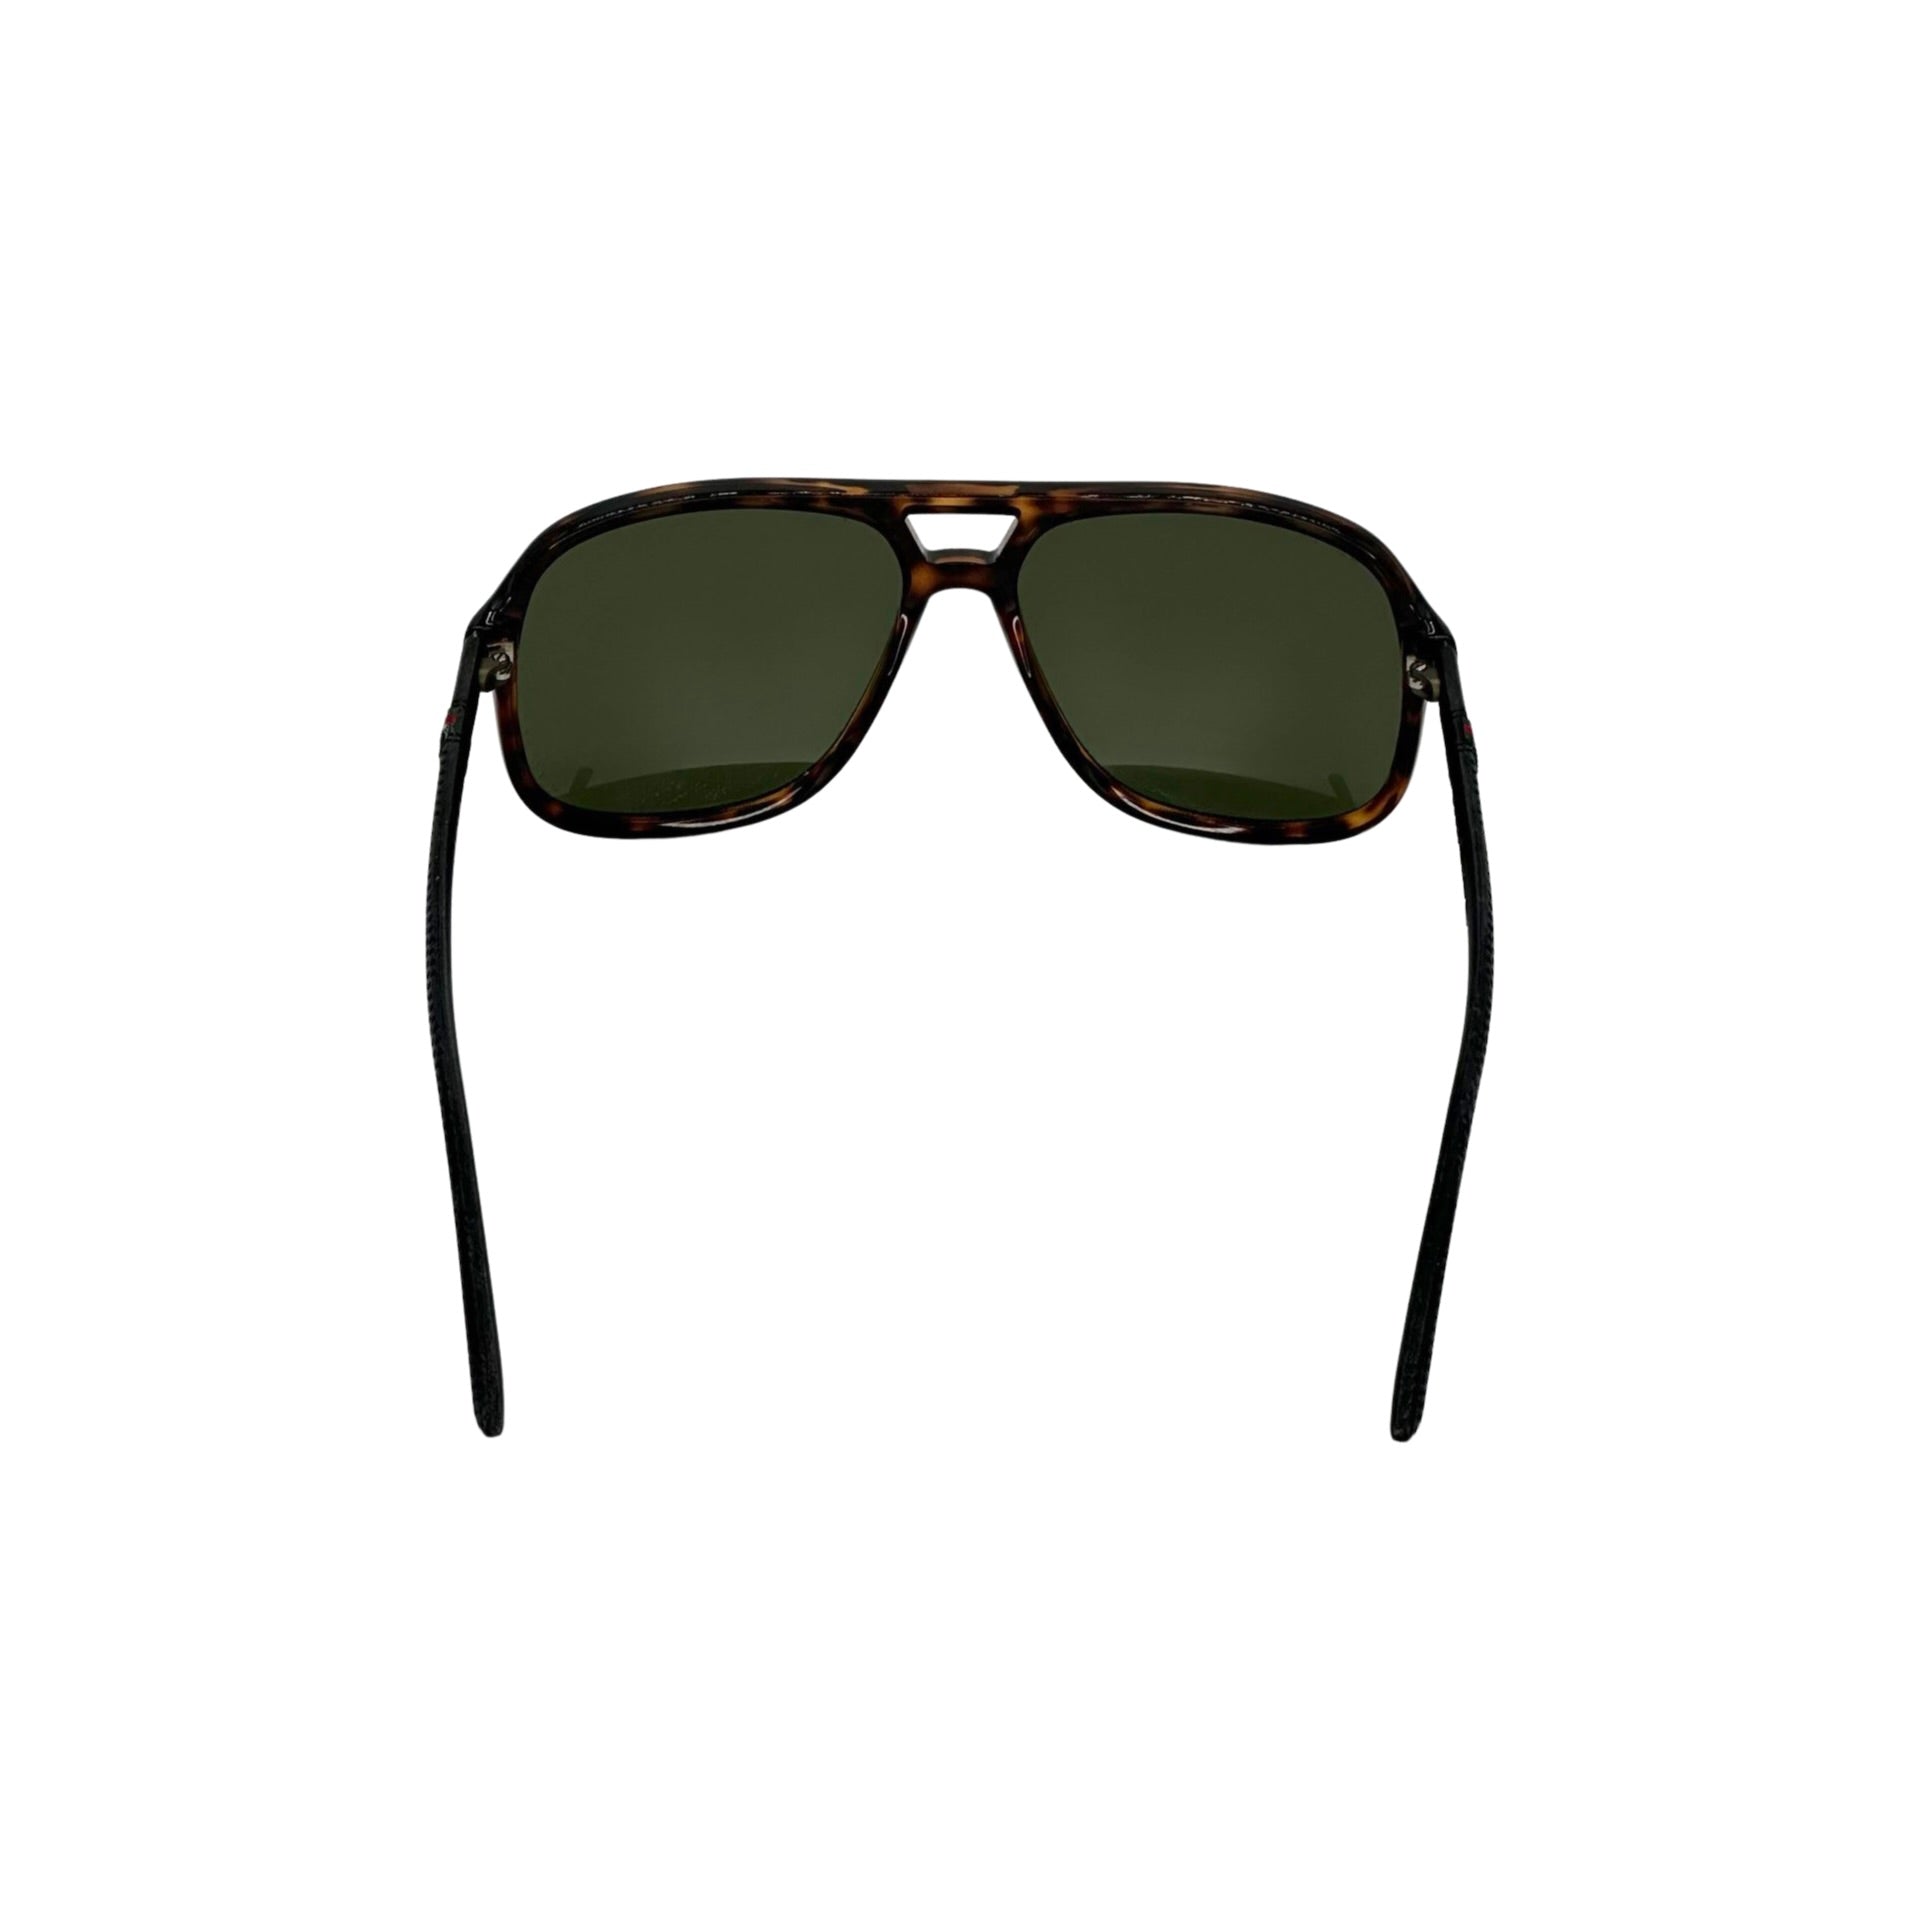 GUCCI: Rounded Aviator Web Sunglasses